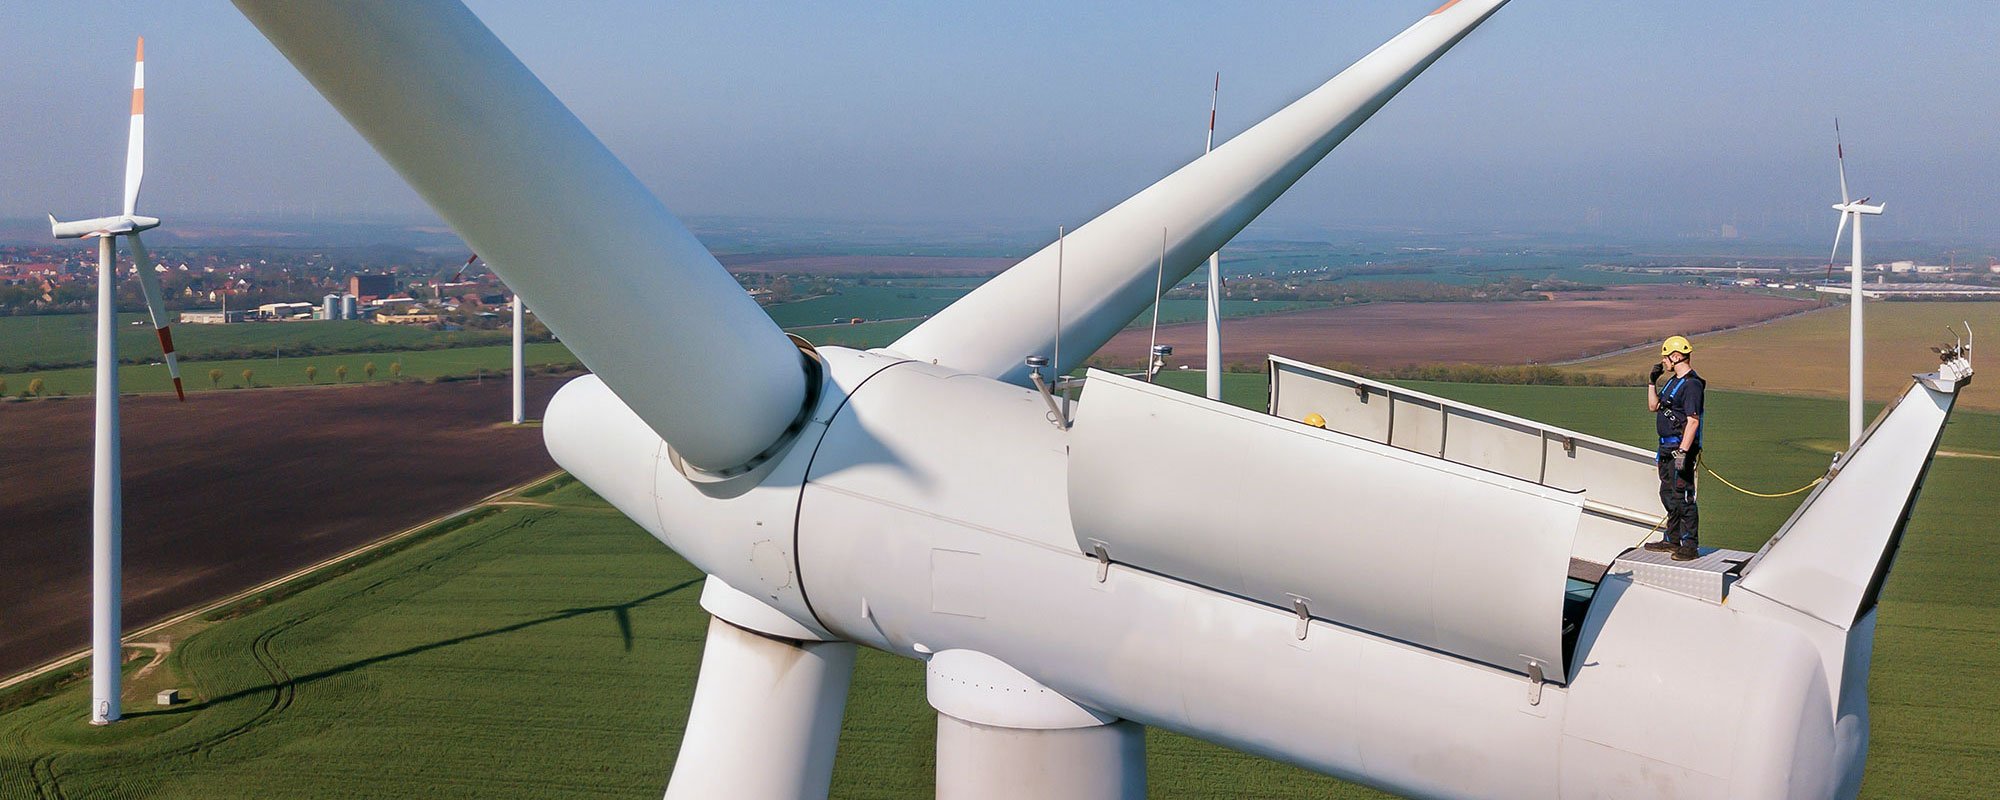 Onshore Projekte in der Windenergie